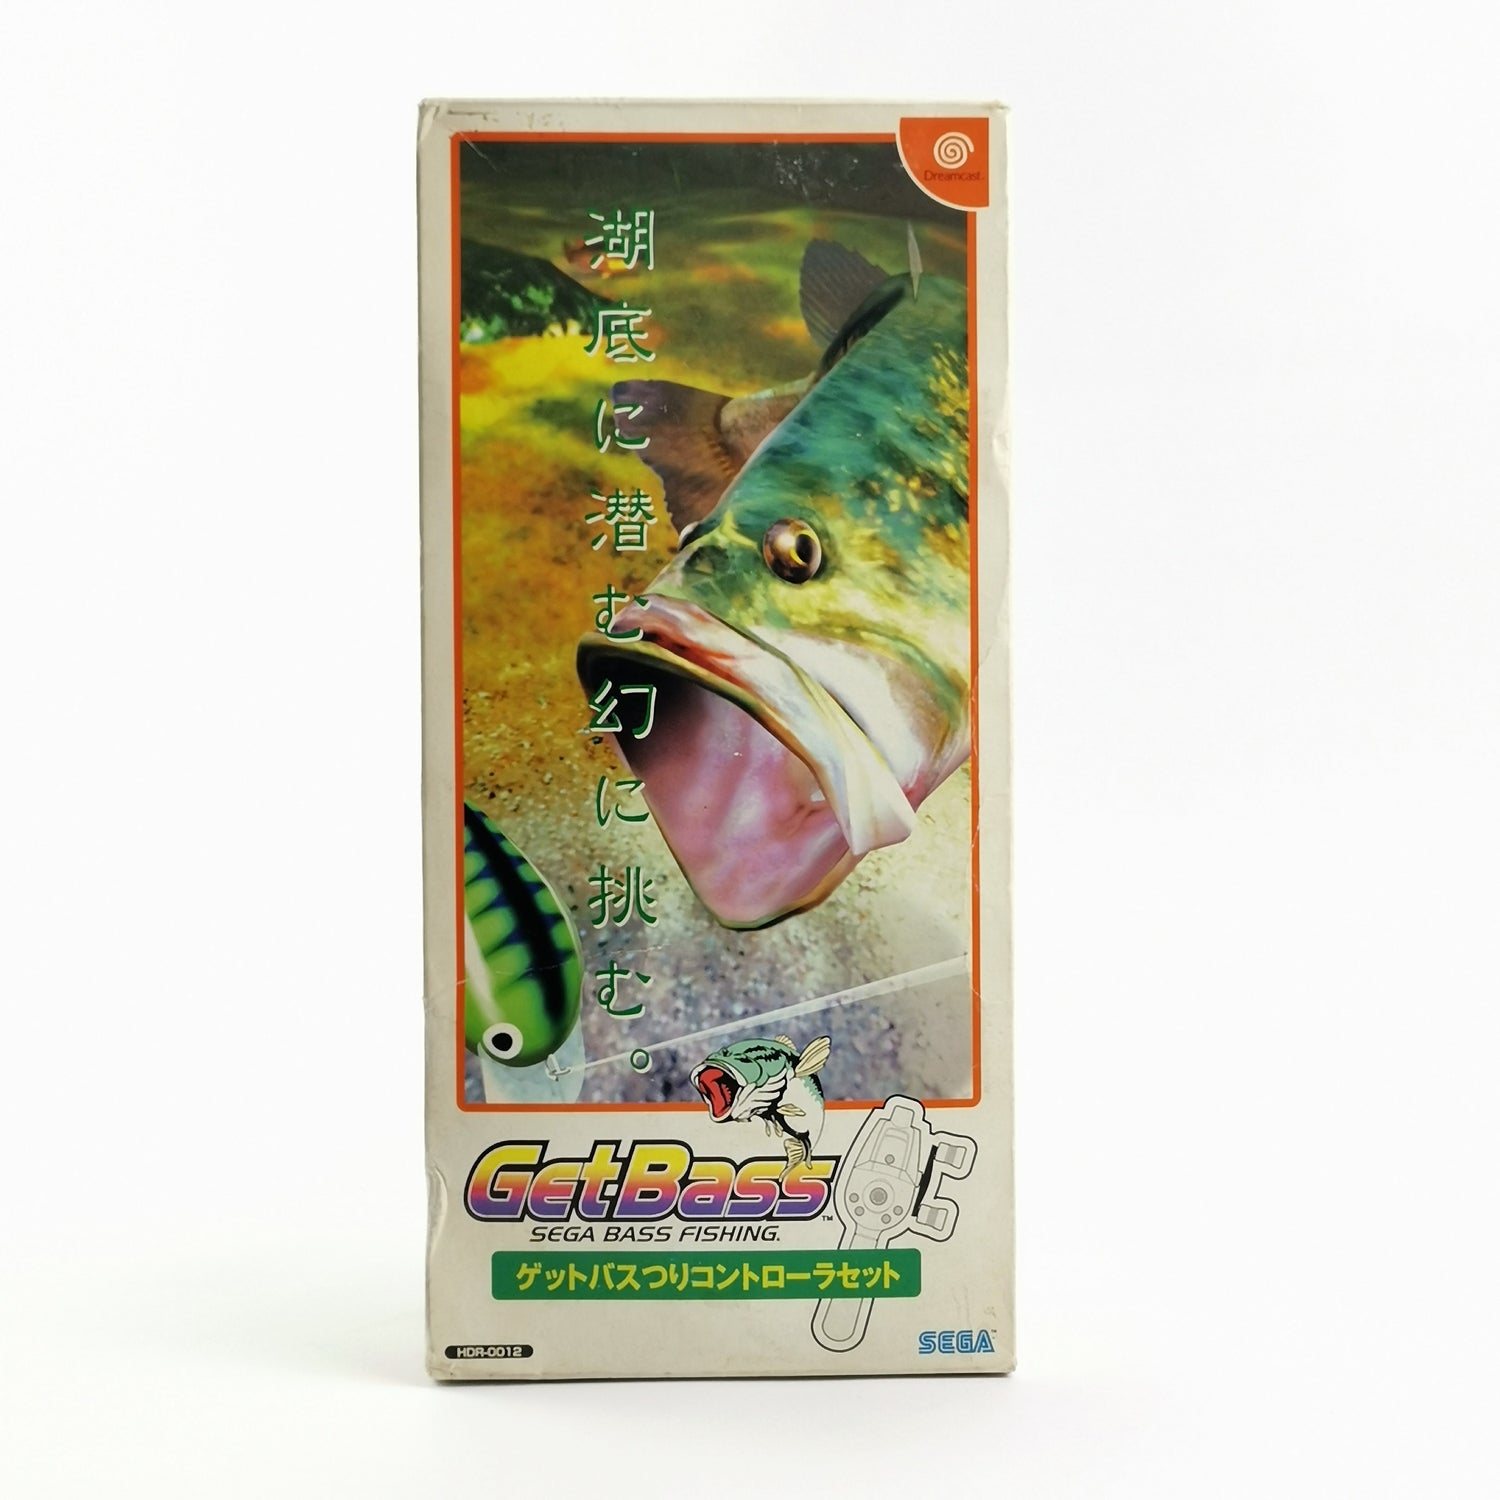 Sega Dreamcast Game: Get Bass Sega Bass Fishing Pak with Fishing Rod - OVP DC JAPAN